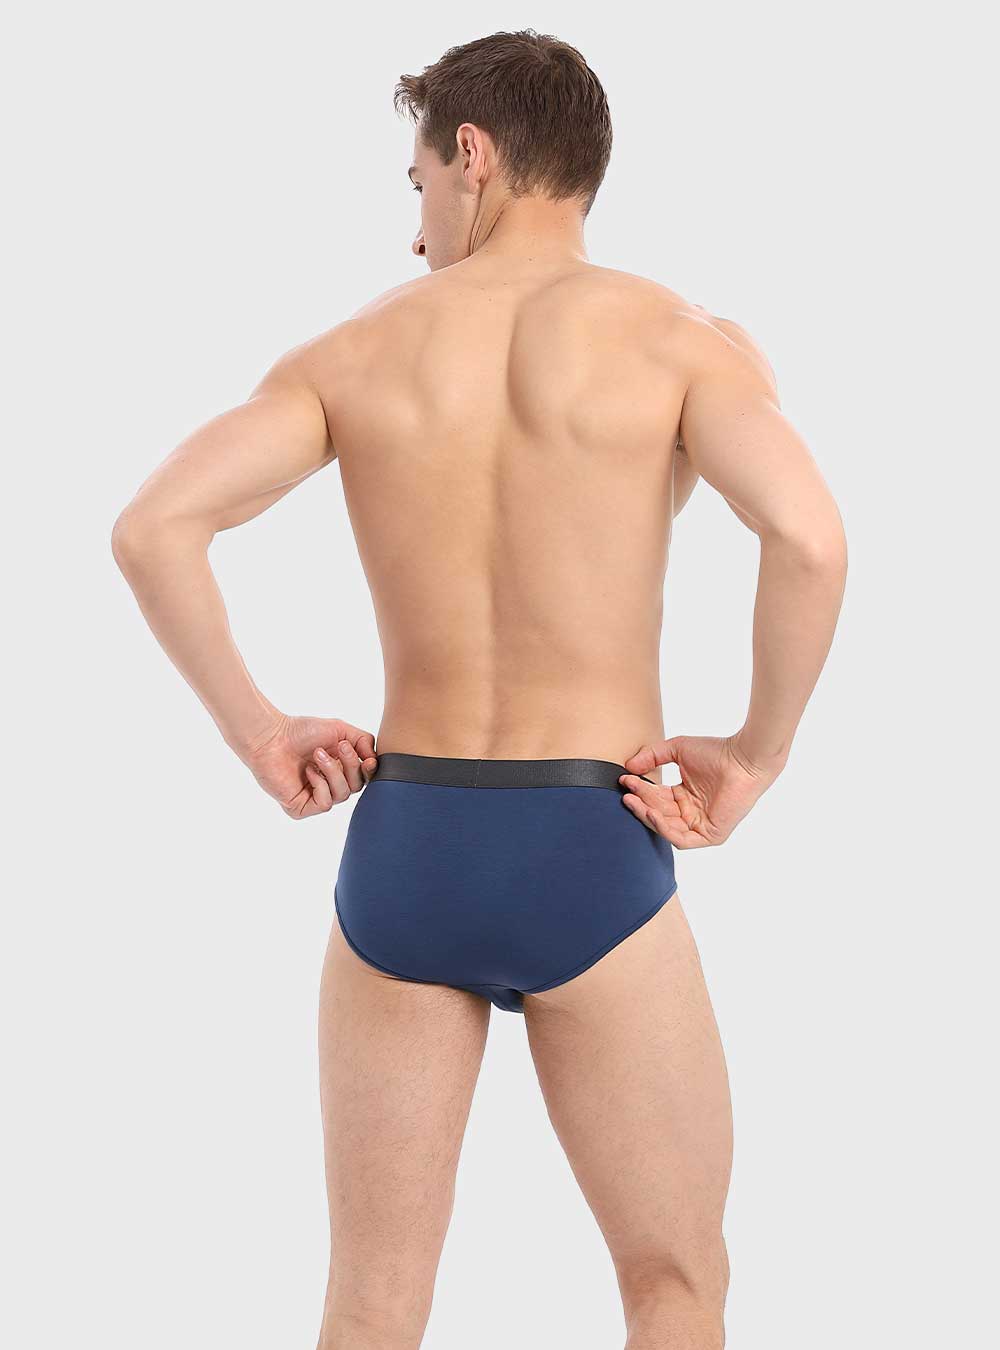 DAVID ARCHY Men's Underwear Bamboo Briefs Super Soft Comfort Lightweight  Pouch B